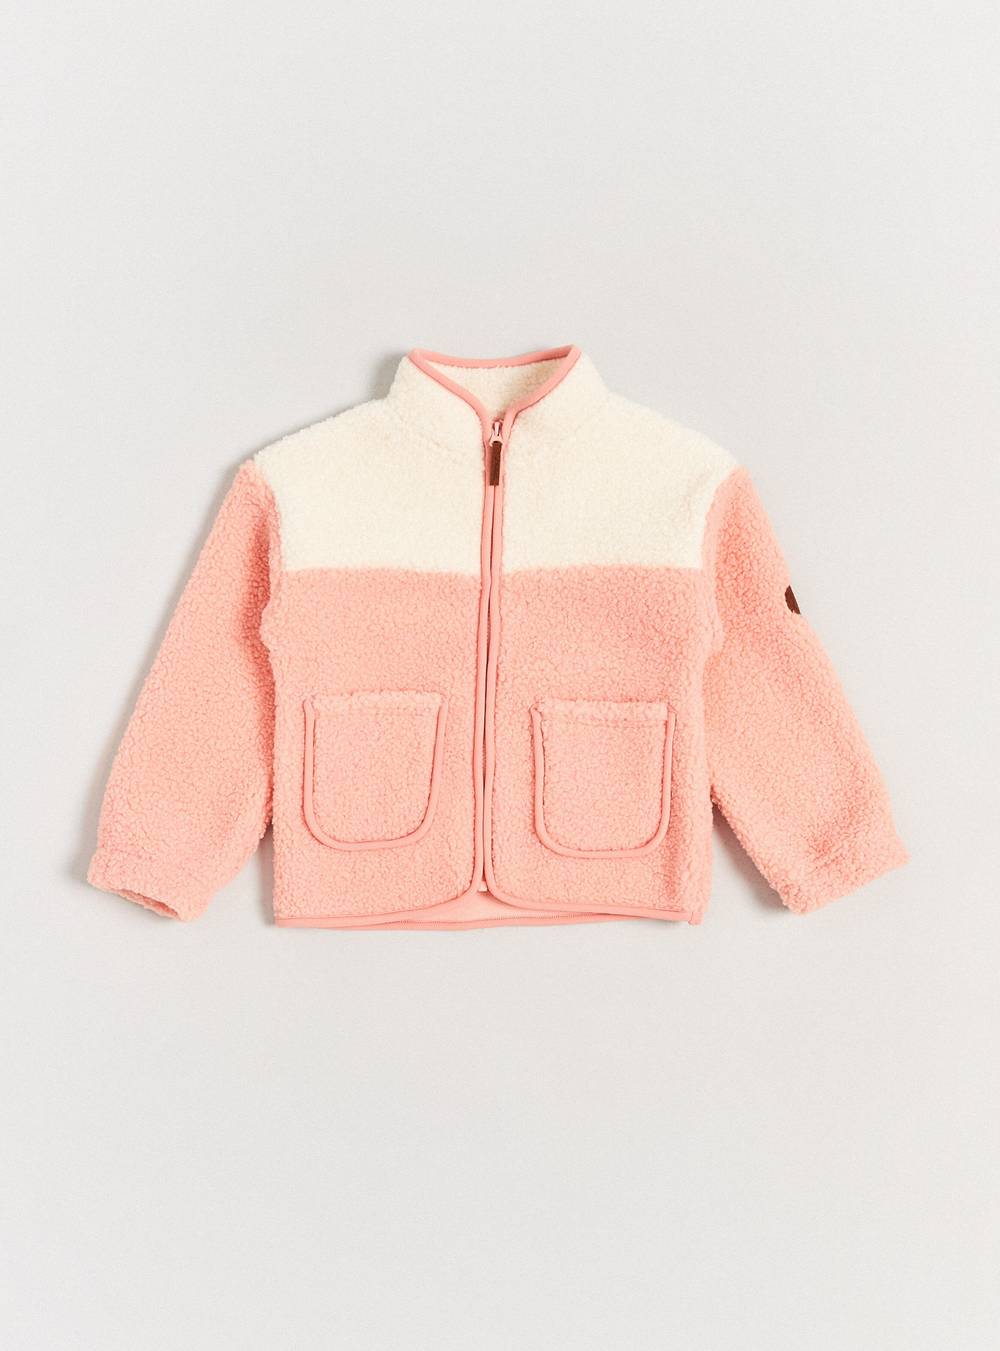 Tribu chaqueta sherpa color block bolsillos rosado pastel 't 6a